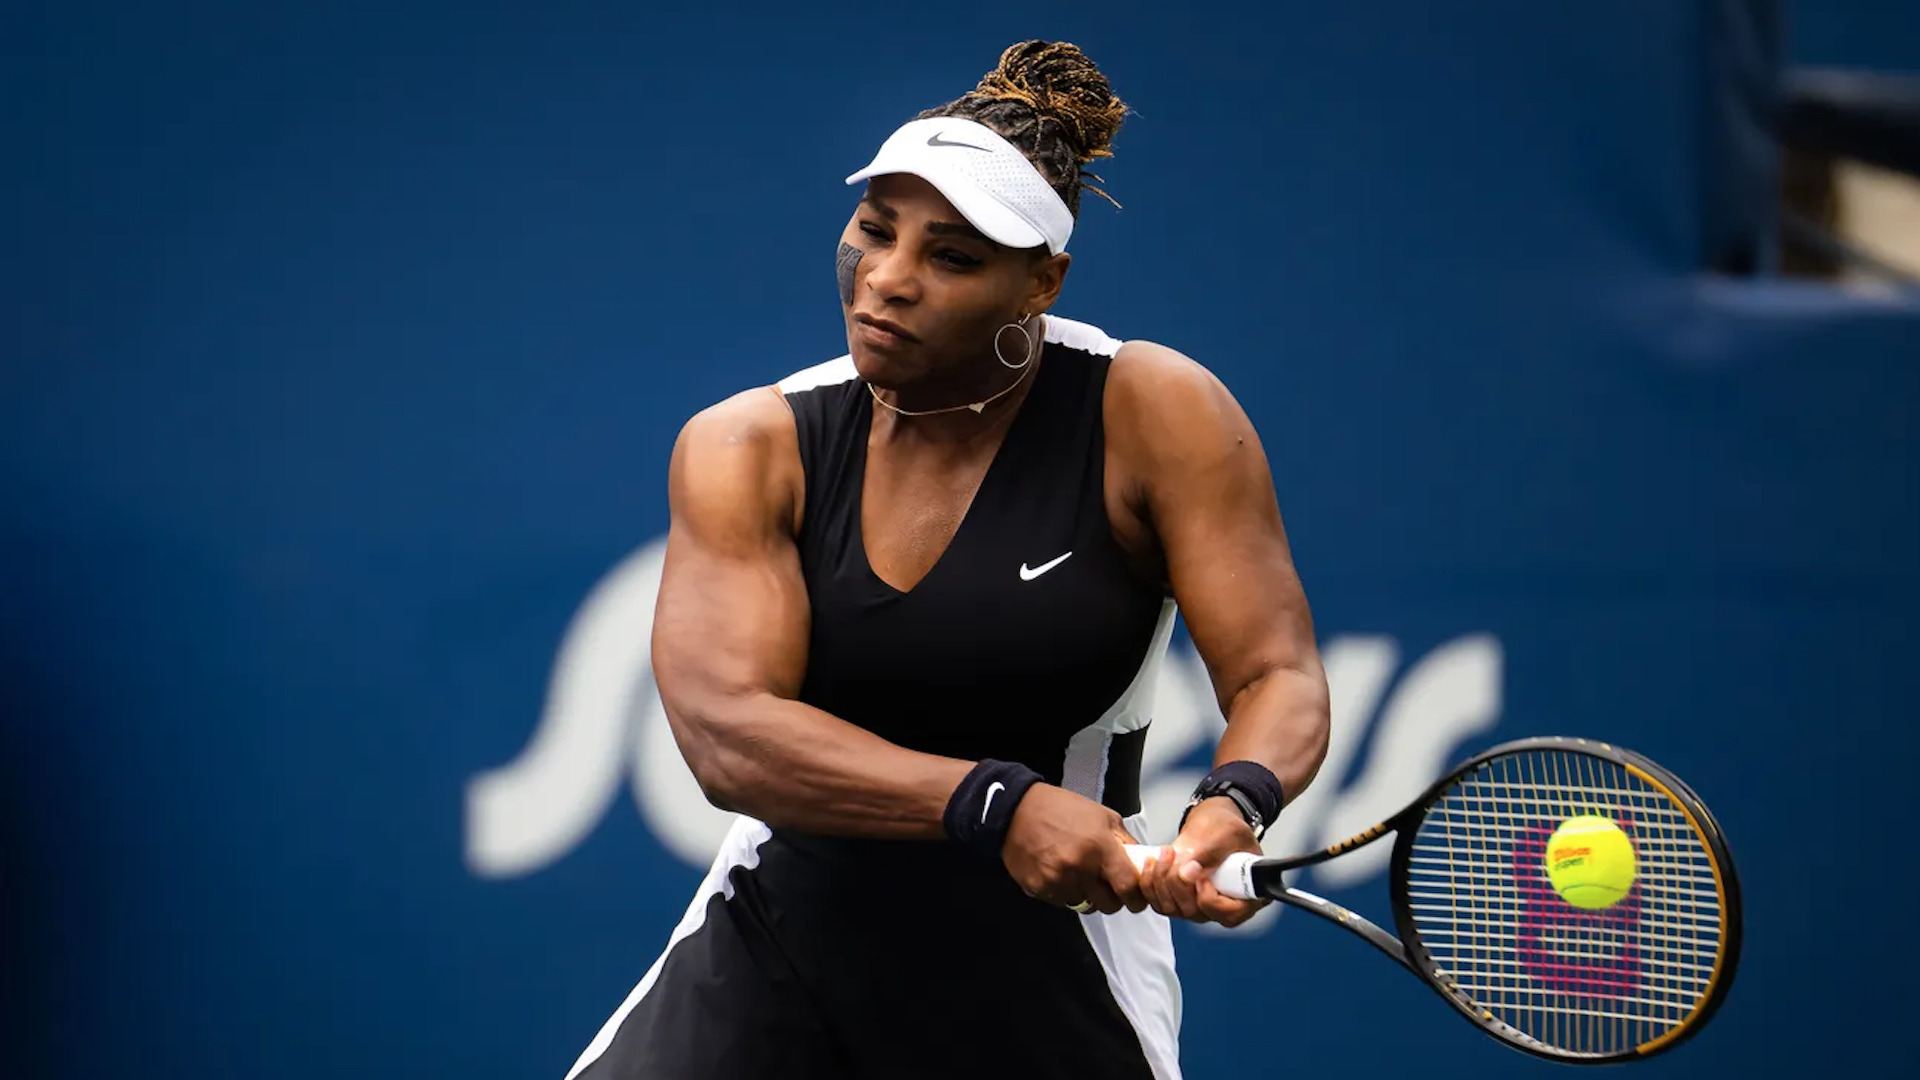 BREAKING: Serena Williams announces retirement